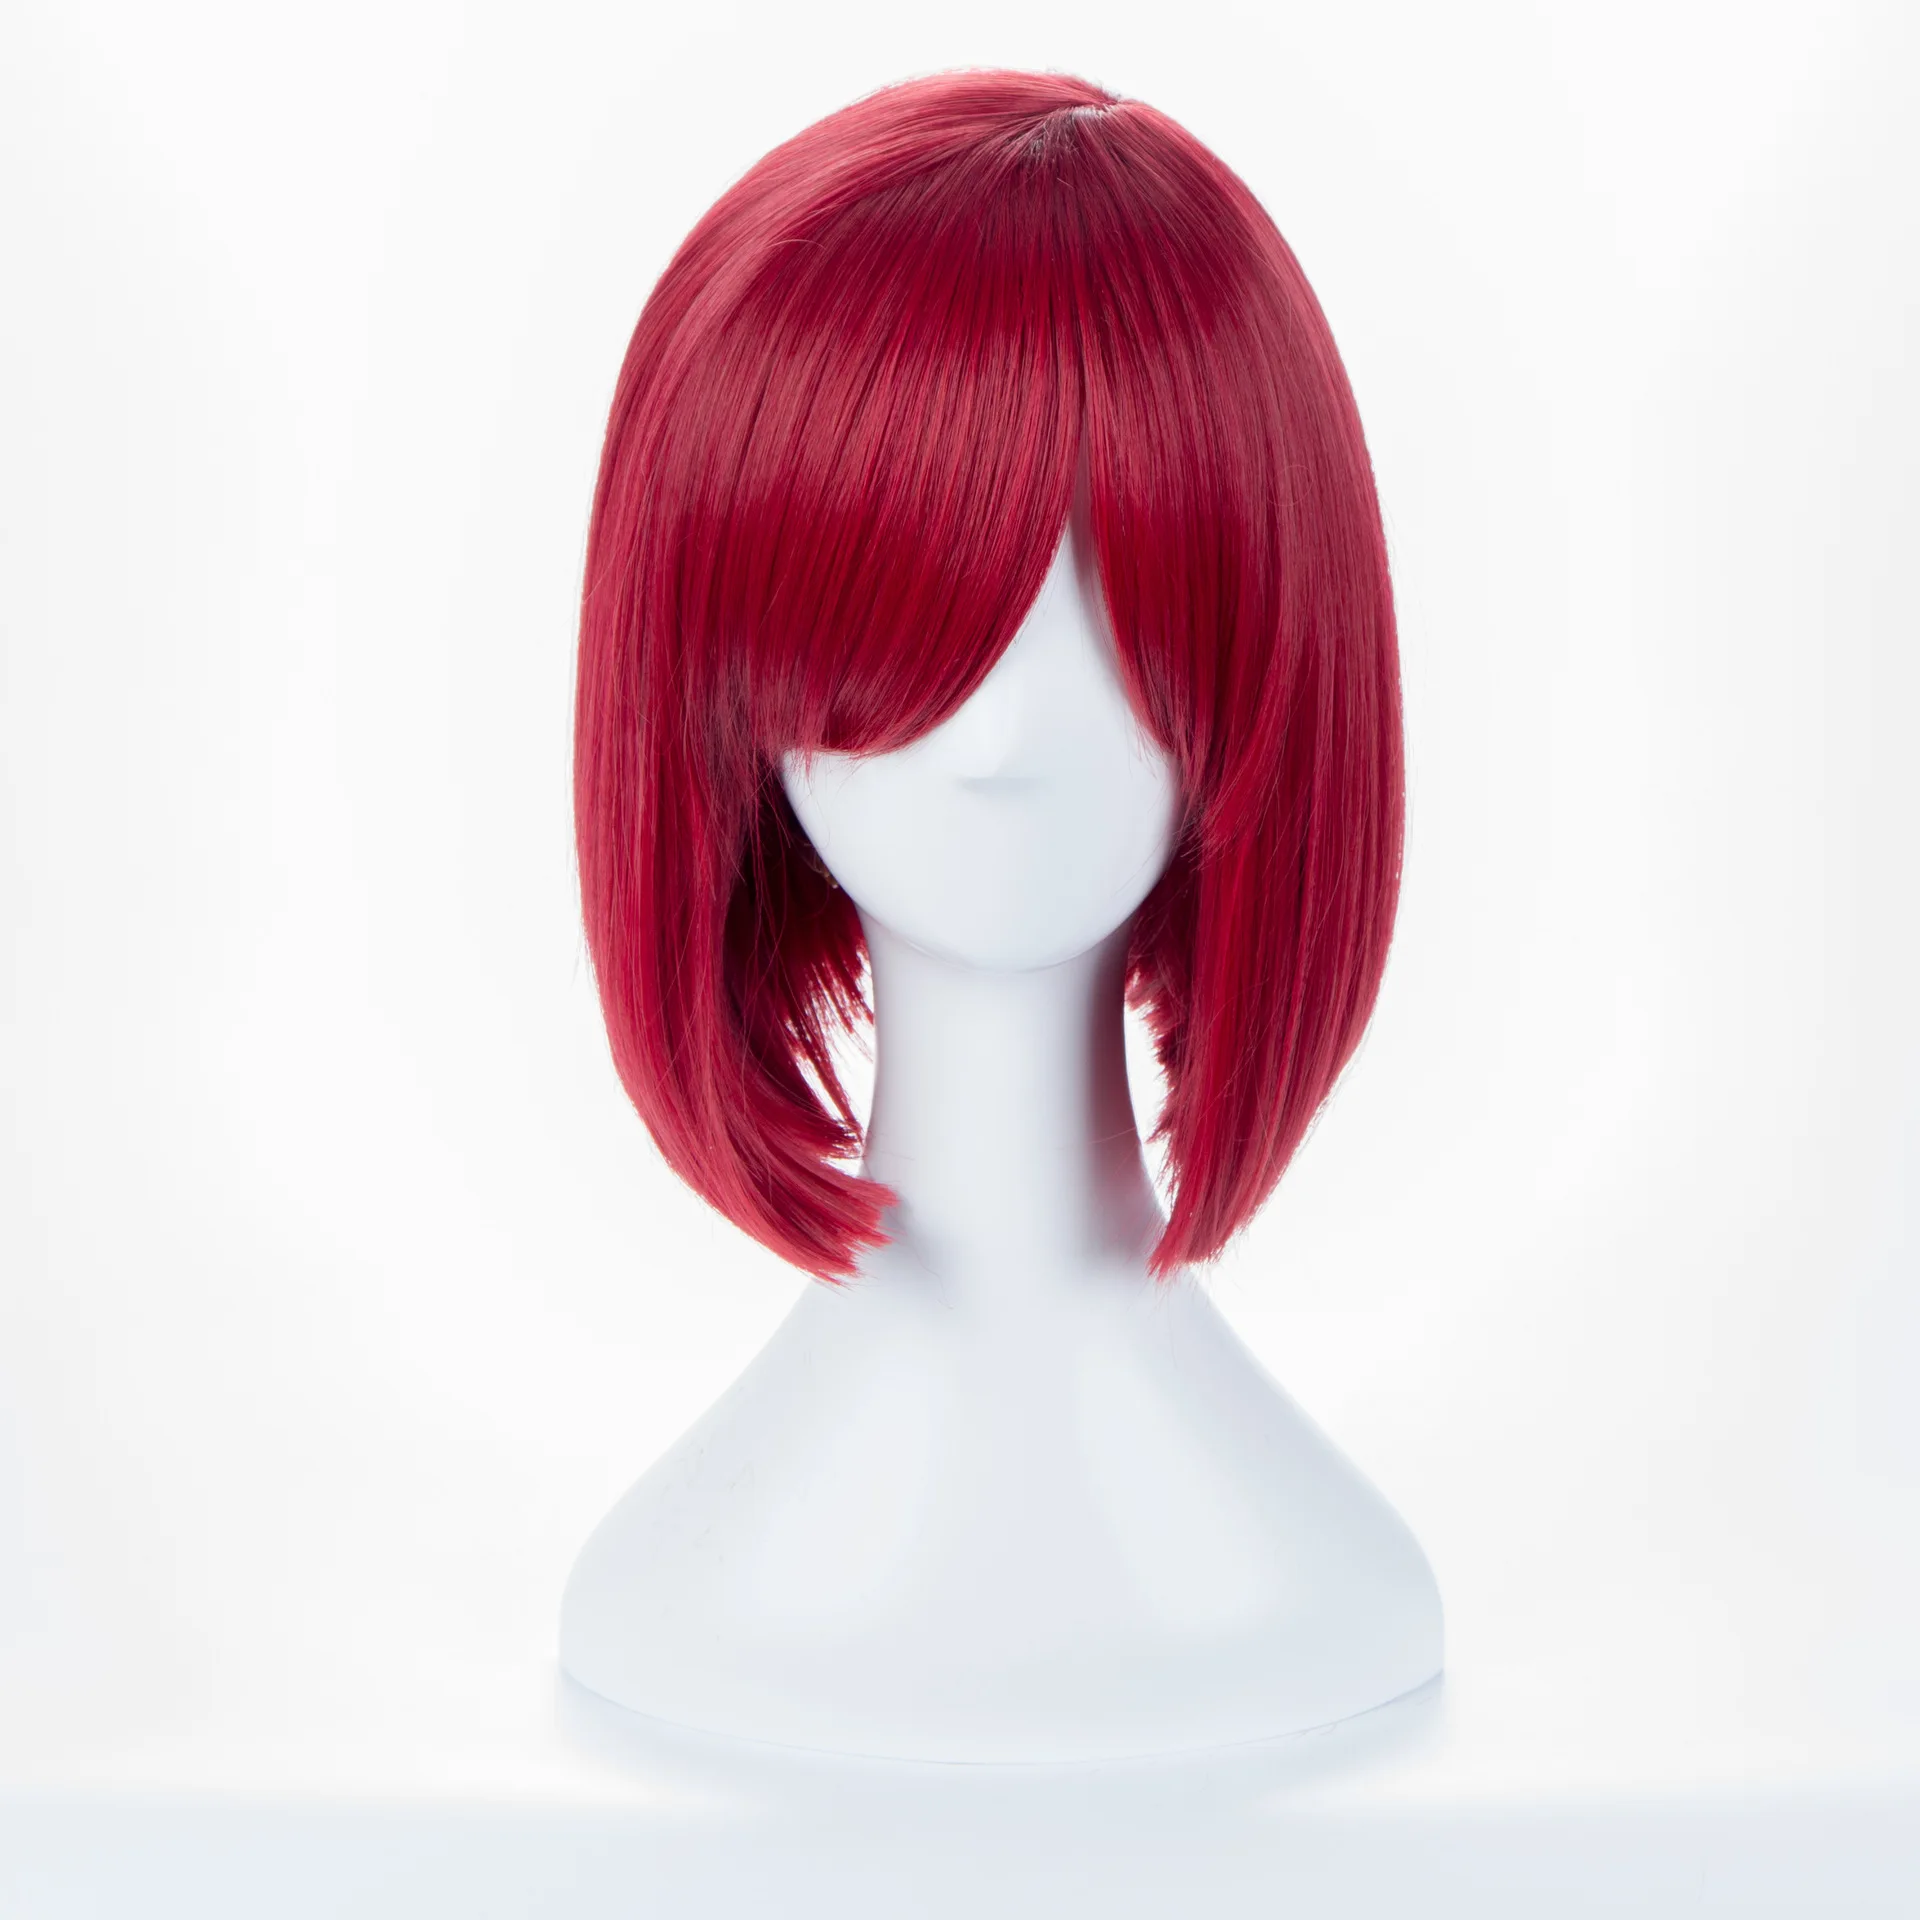 

Danganronpa V3 Killing Harmony Yumeno Himiko Cosplay Wig Anime Dangan Ronpa Red Short Heat Resistant Hair Synthetic Wigs +WigCap